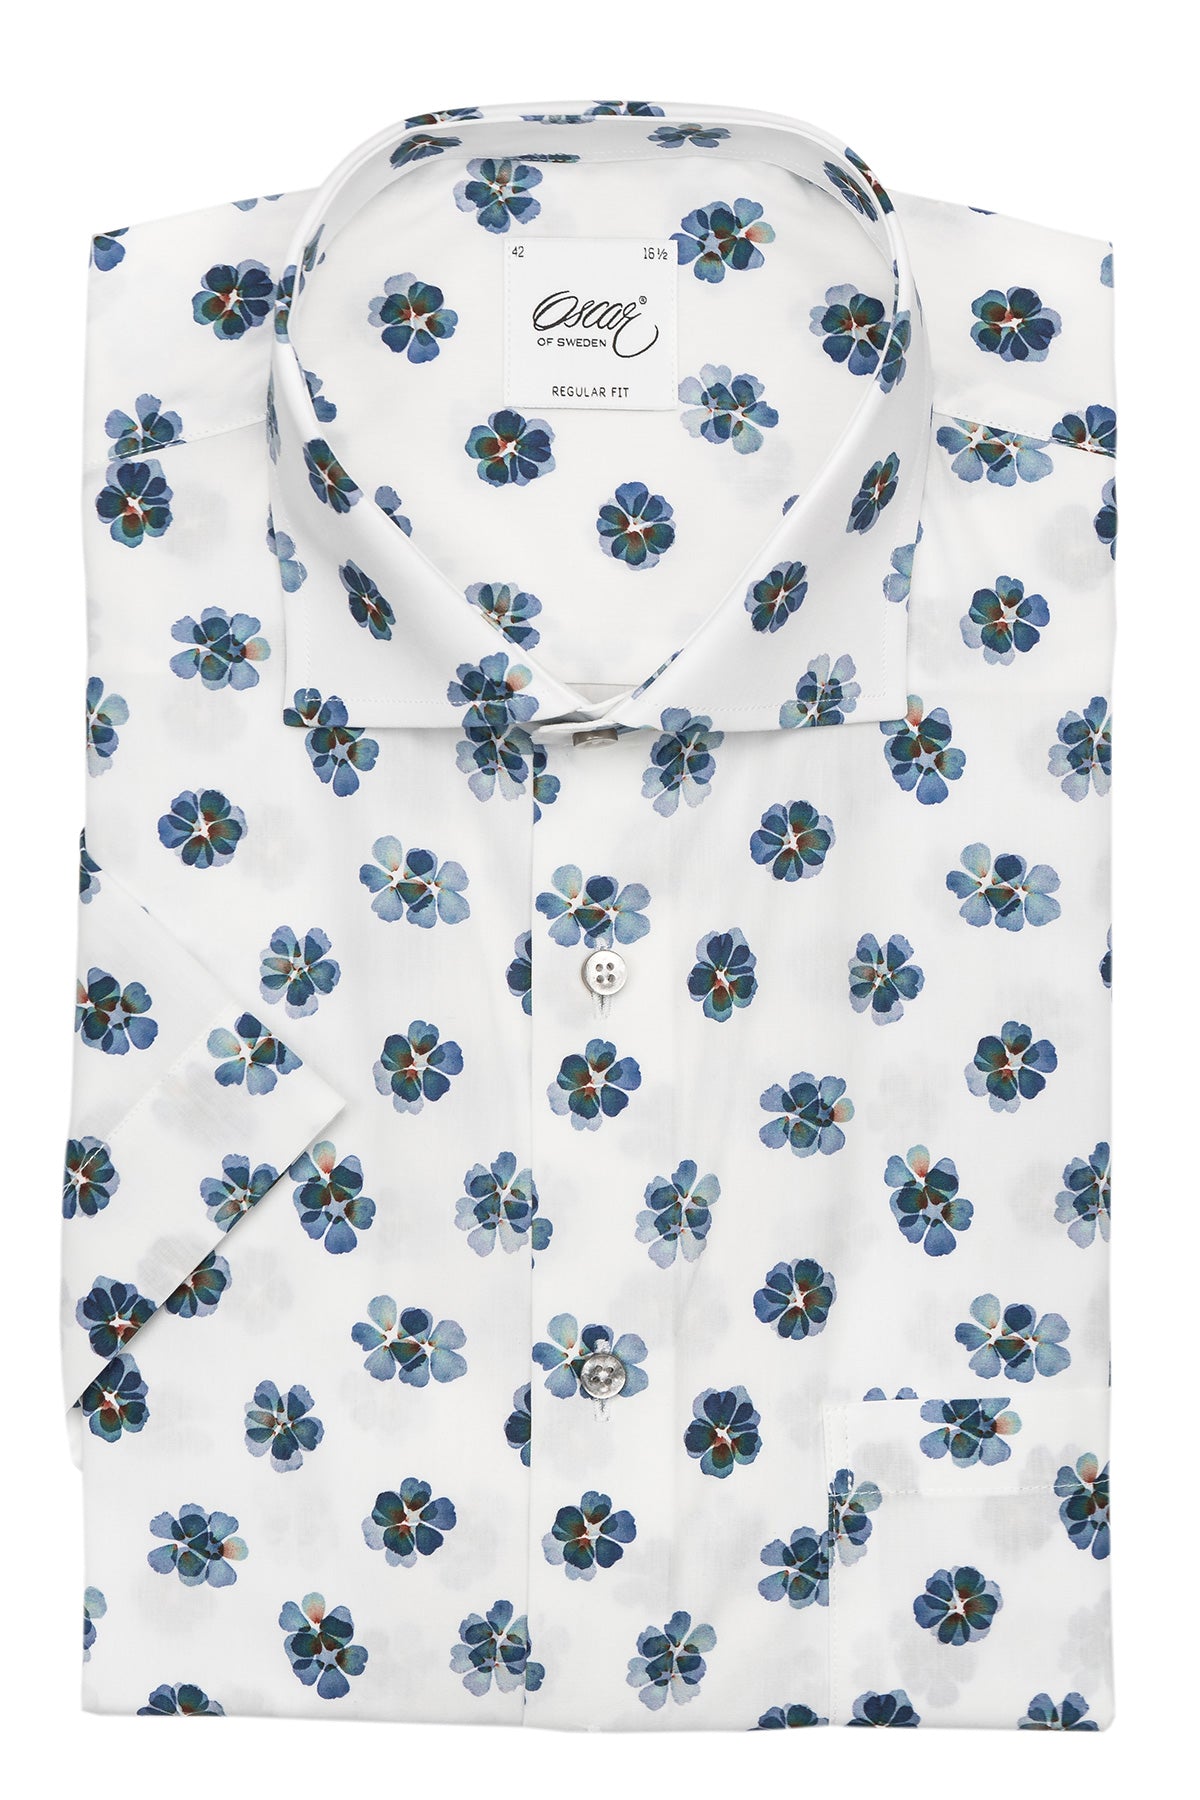 Blue flower printed short sleeve regular fit shirt